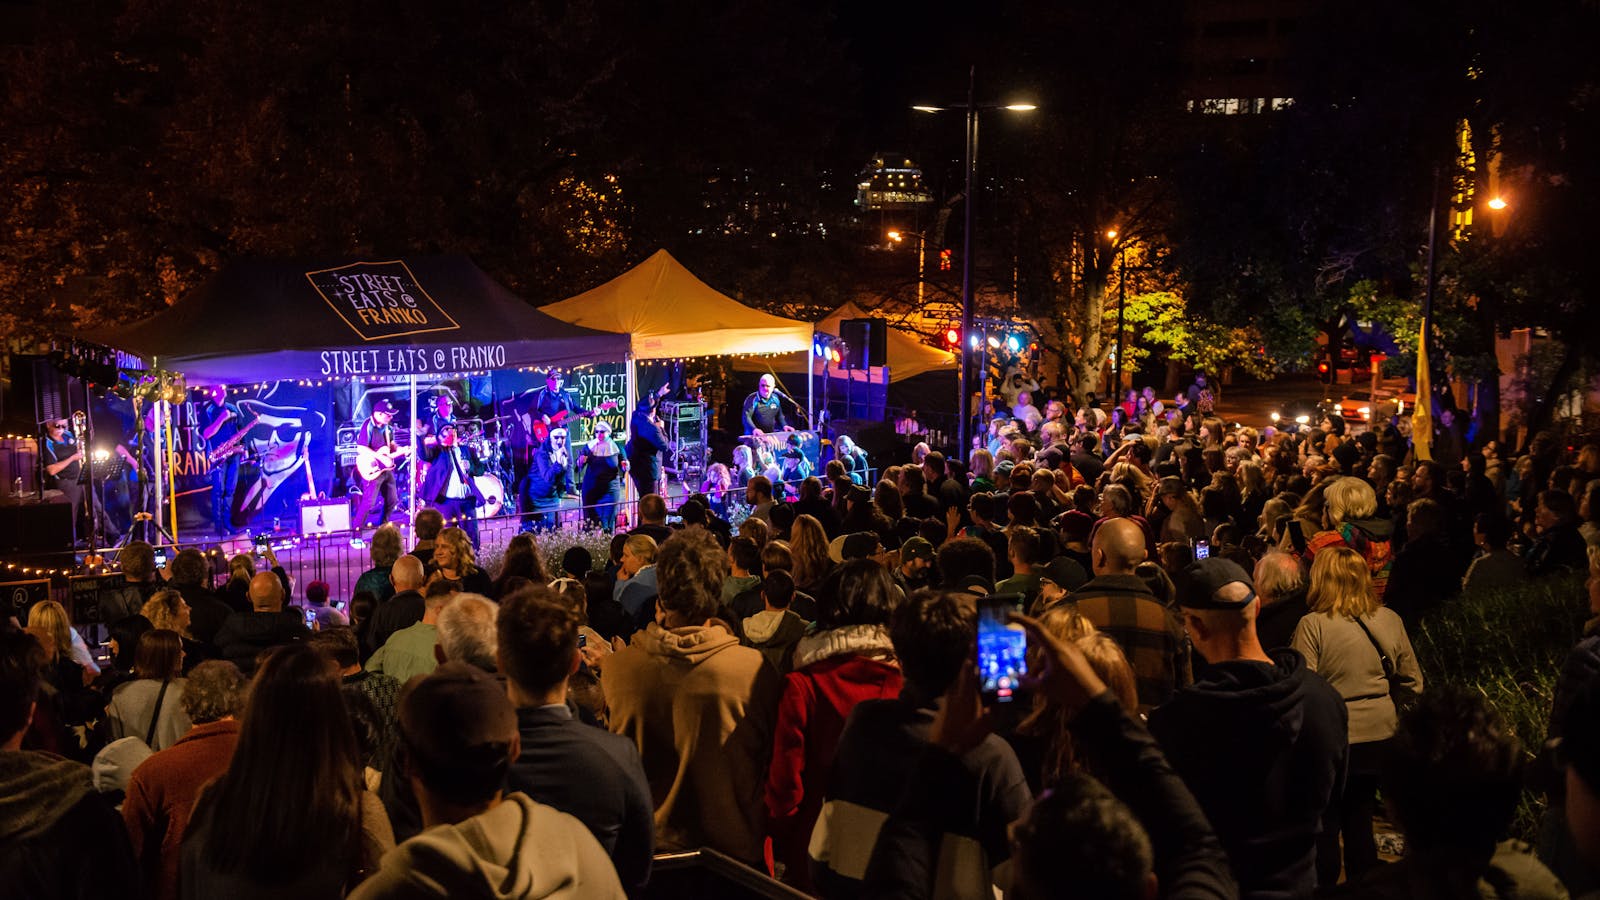 Street Eats @ Franko, Hobart, Tasmania - Blues Brothers performing to crowd